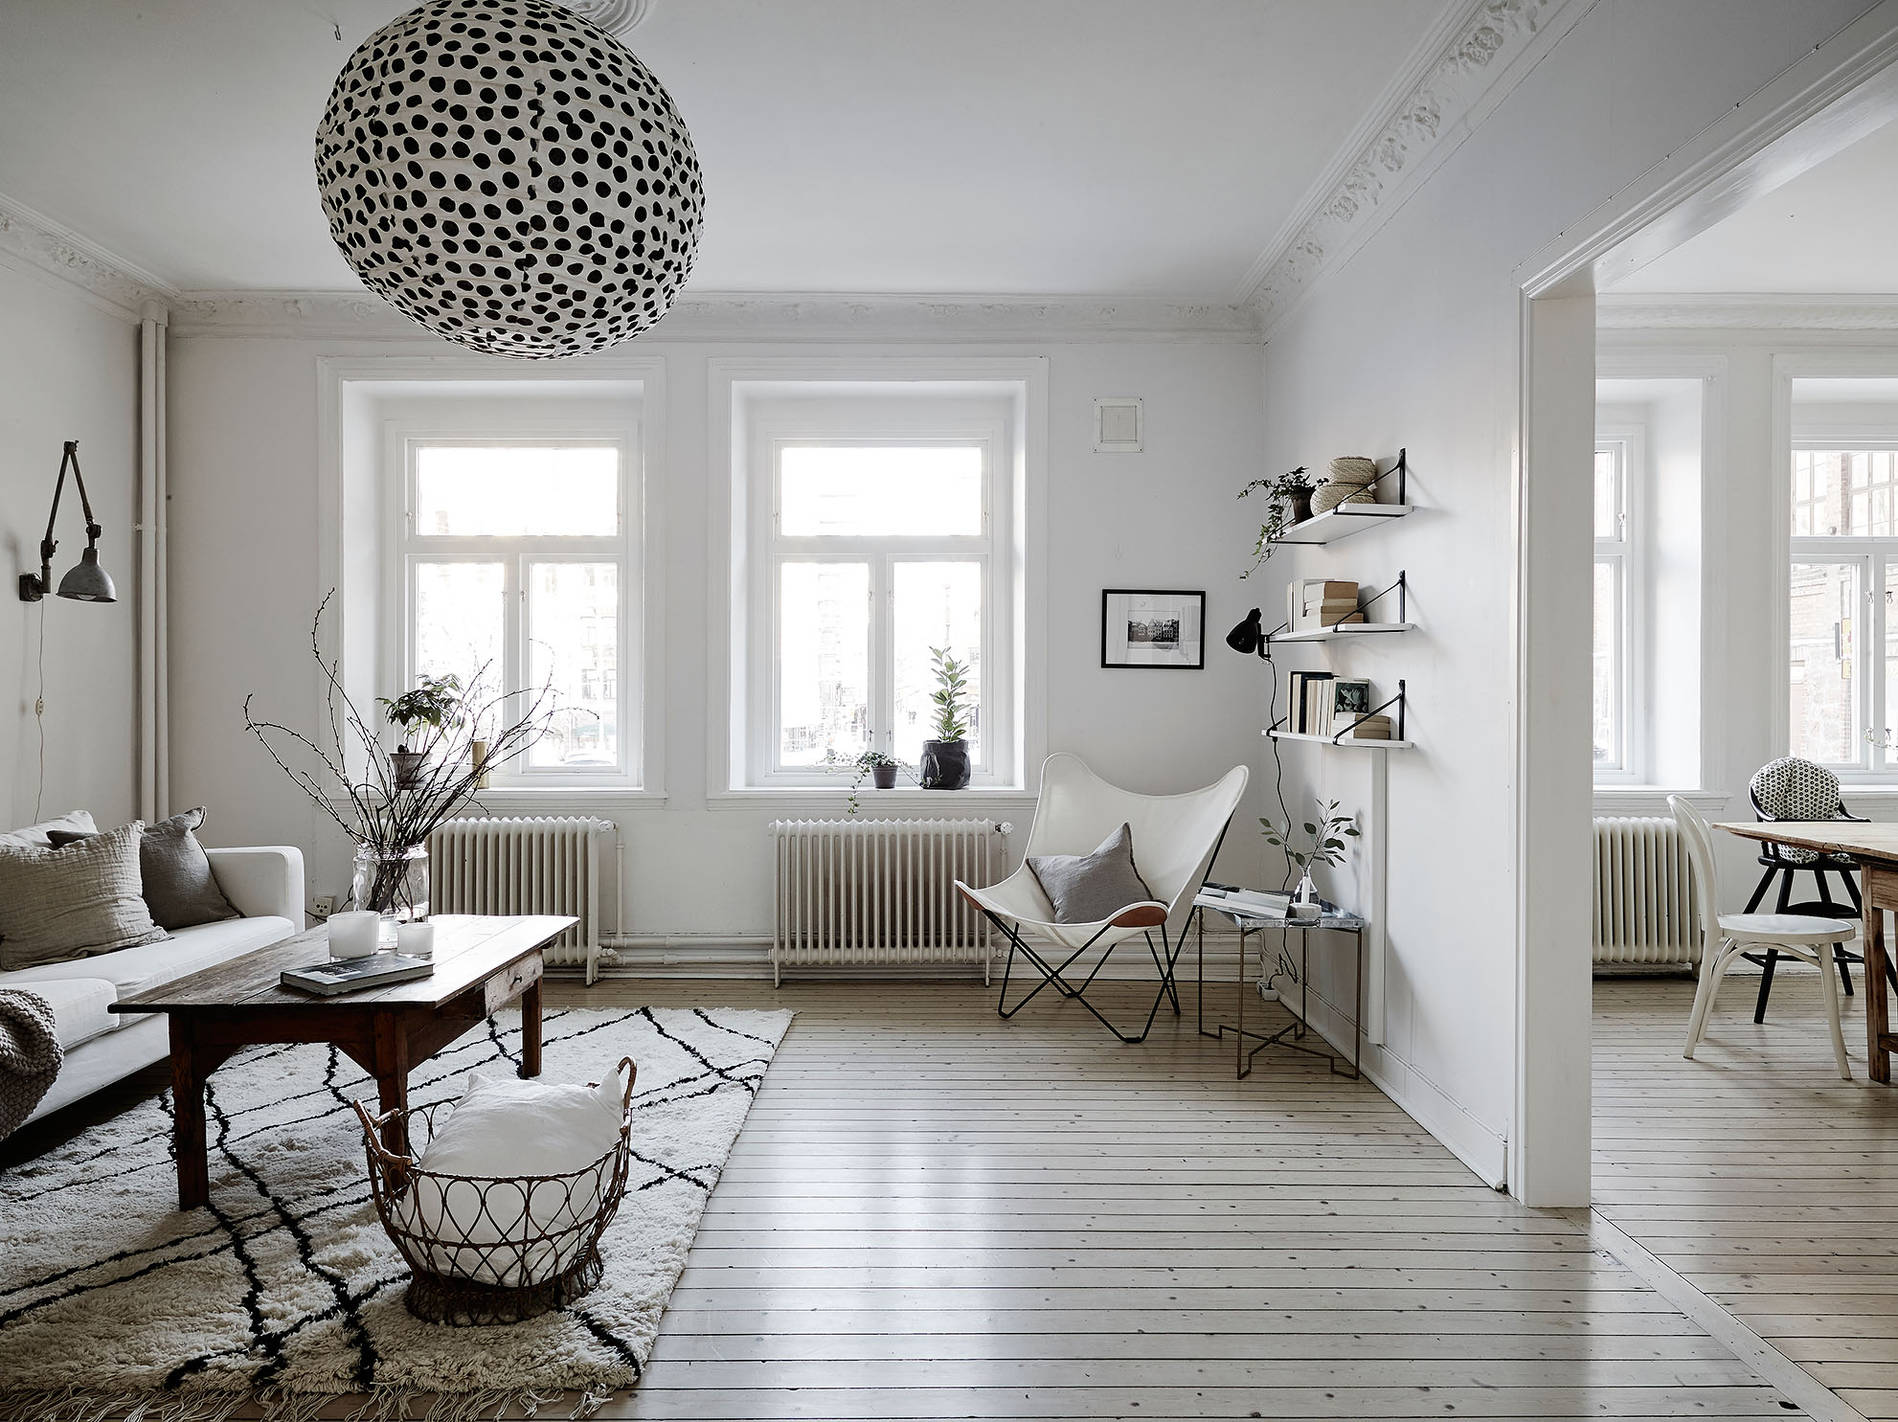 Swedish interior design on Nordhemsgatan 31 A - Archiscene - Your Daily ...